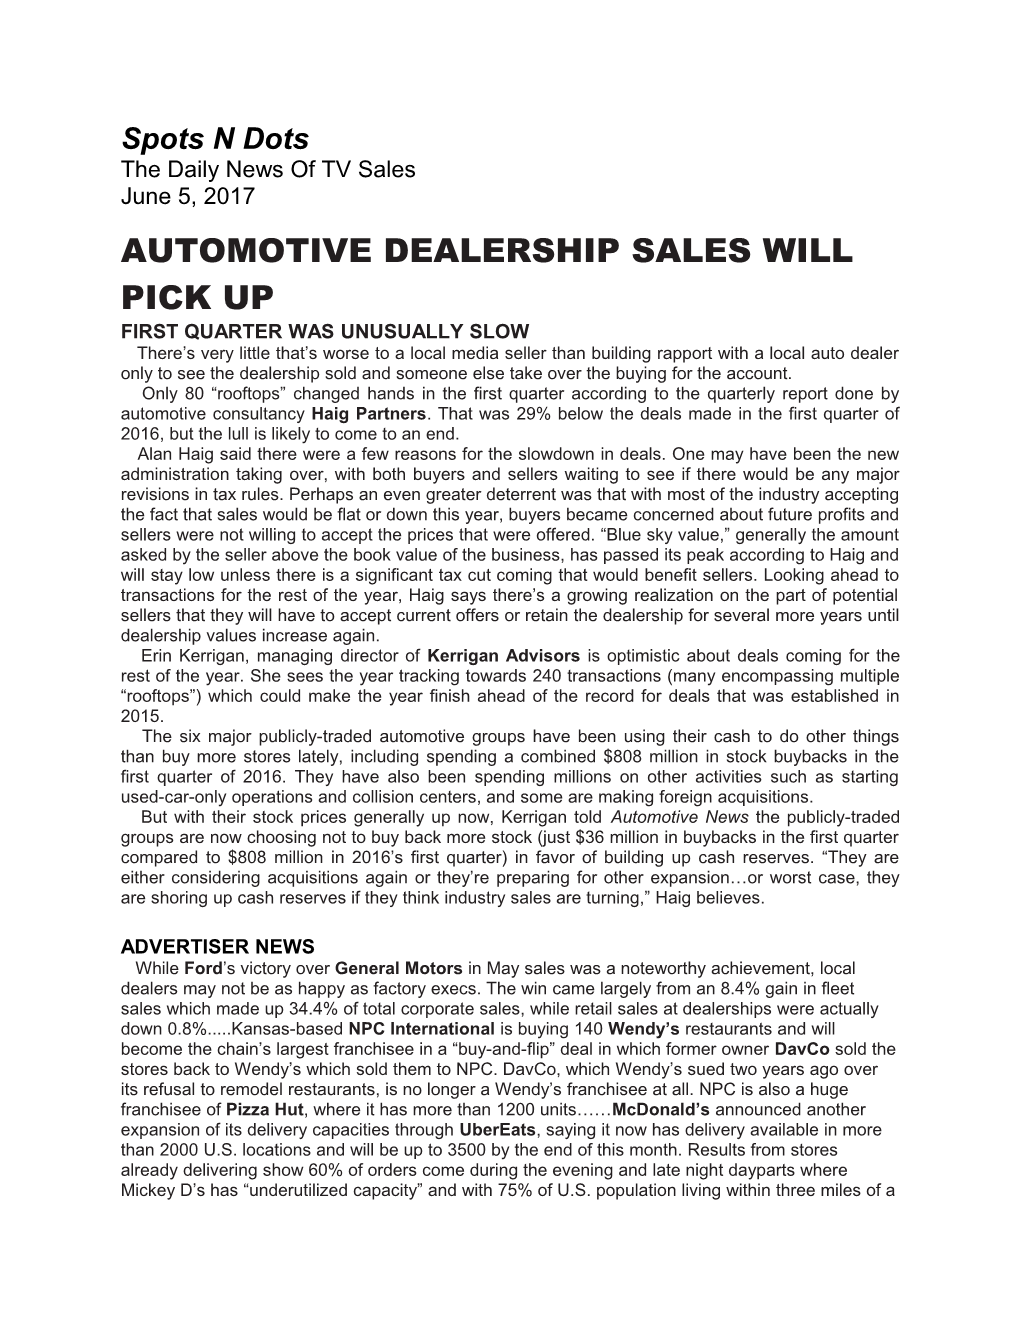 Automotive Dealership Sales Will Pick Up